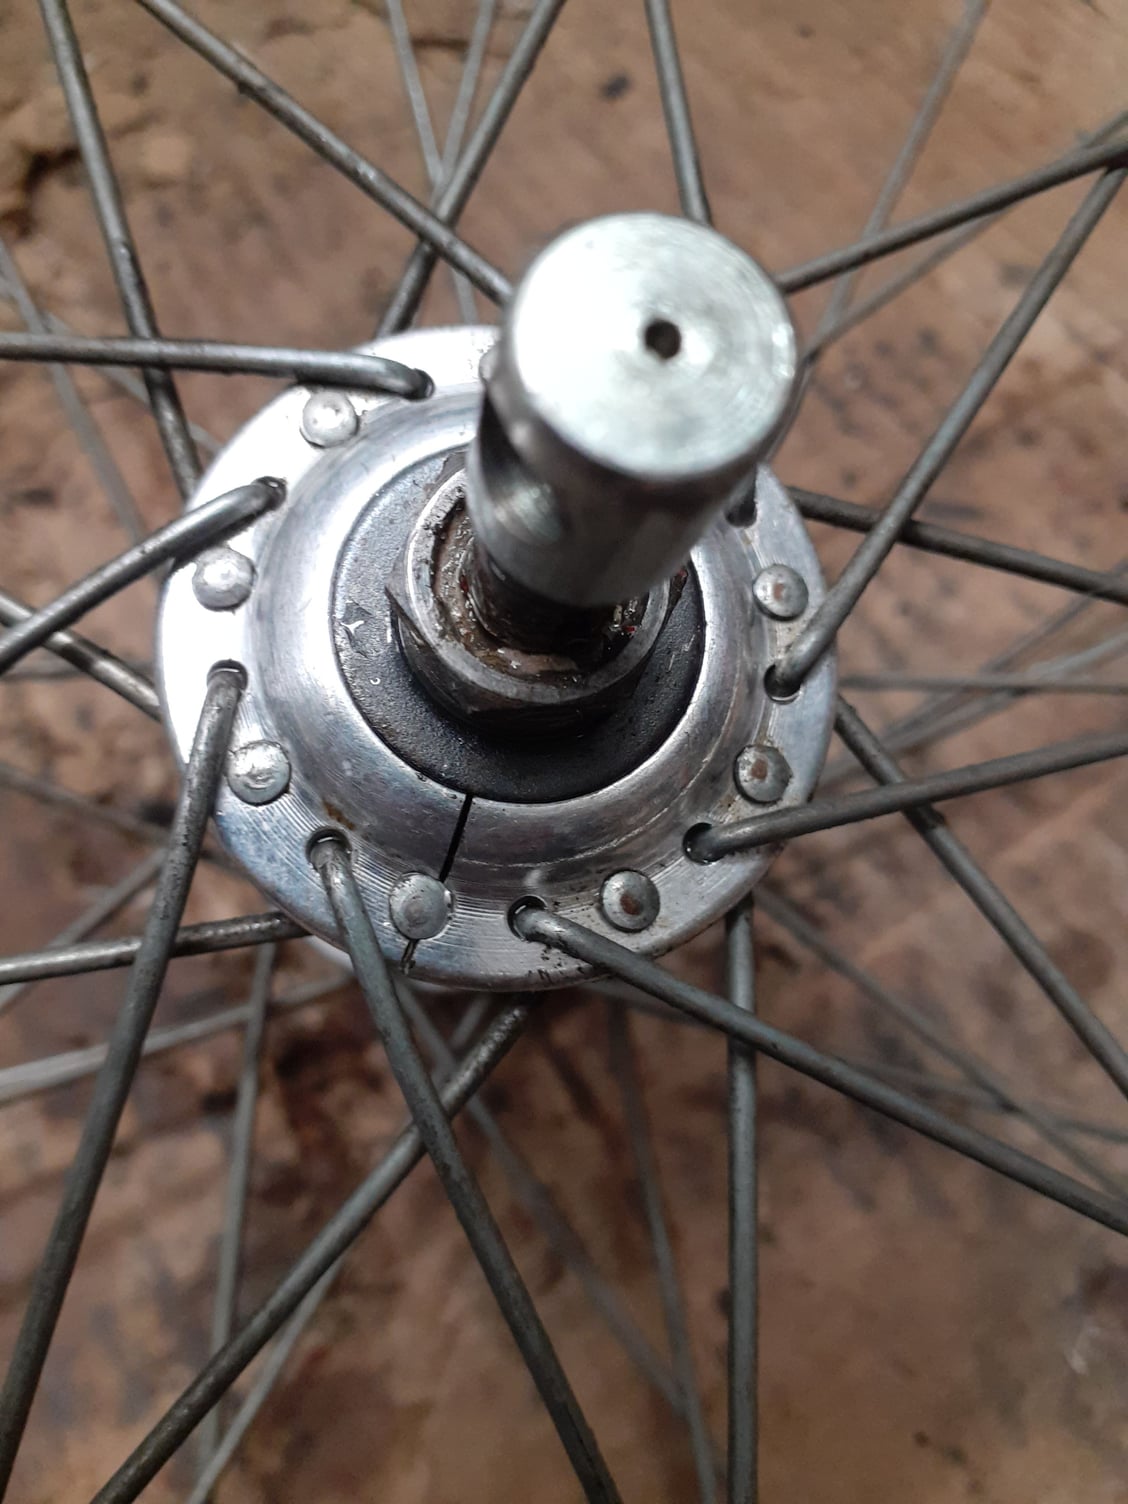 Cracked hub - Bike Forums